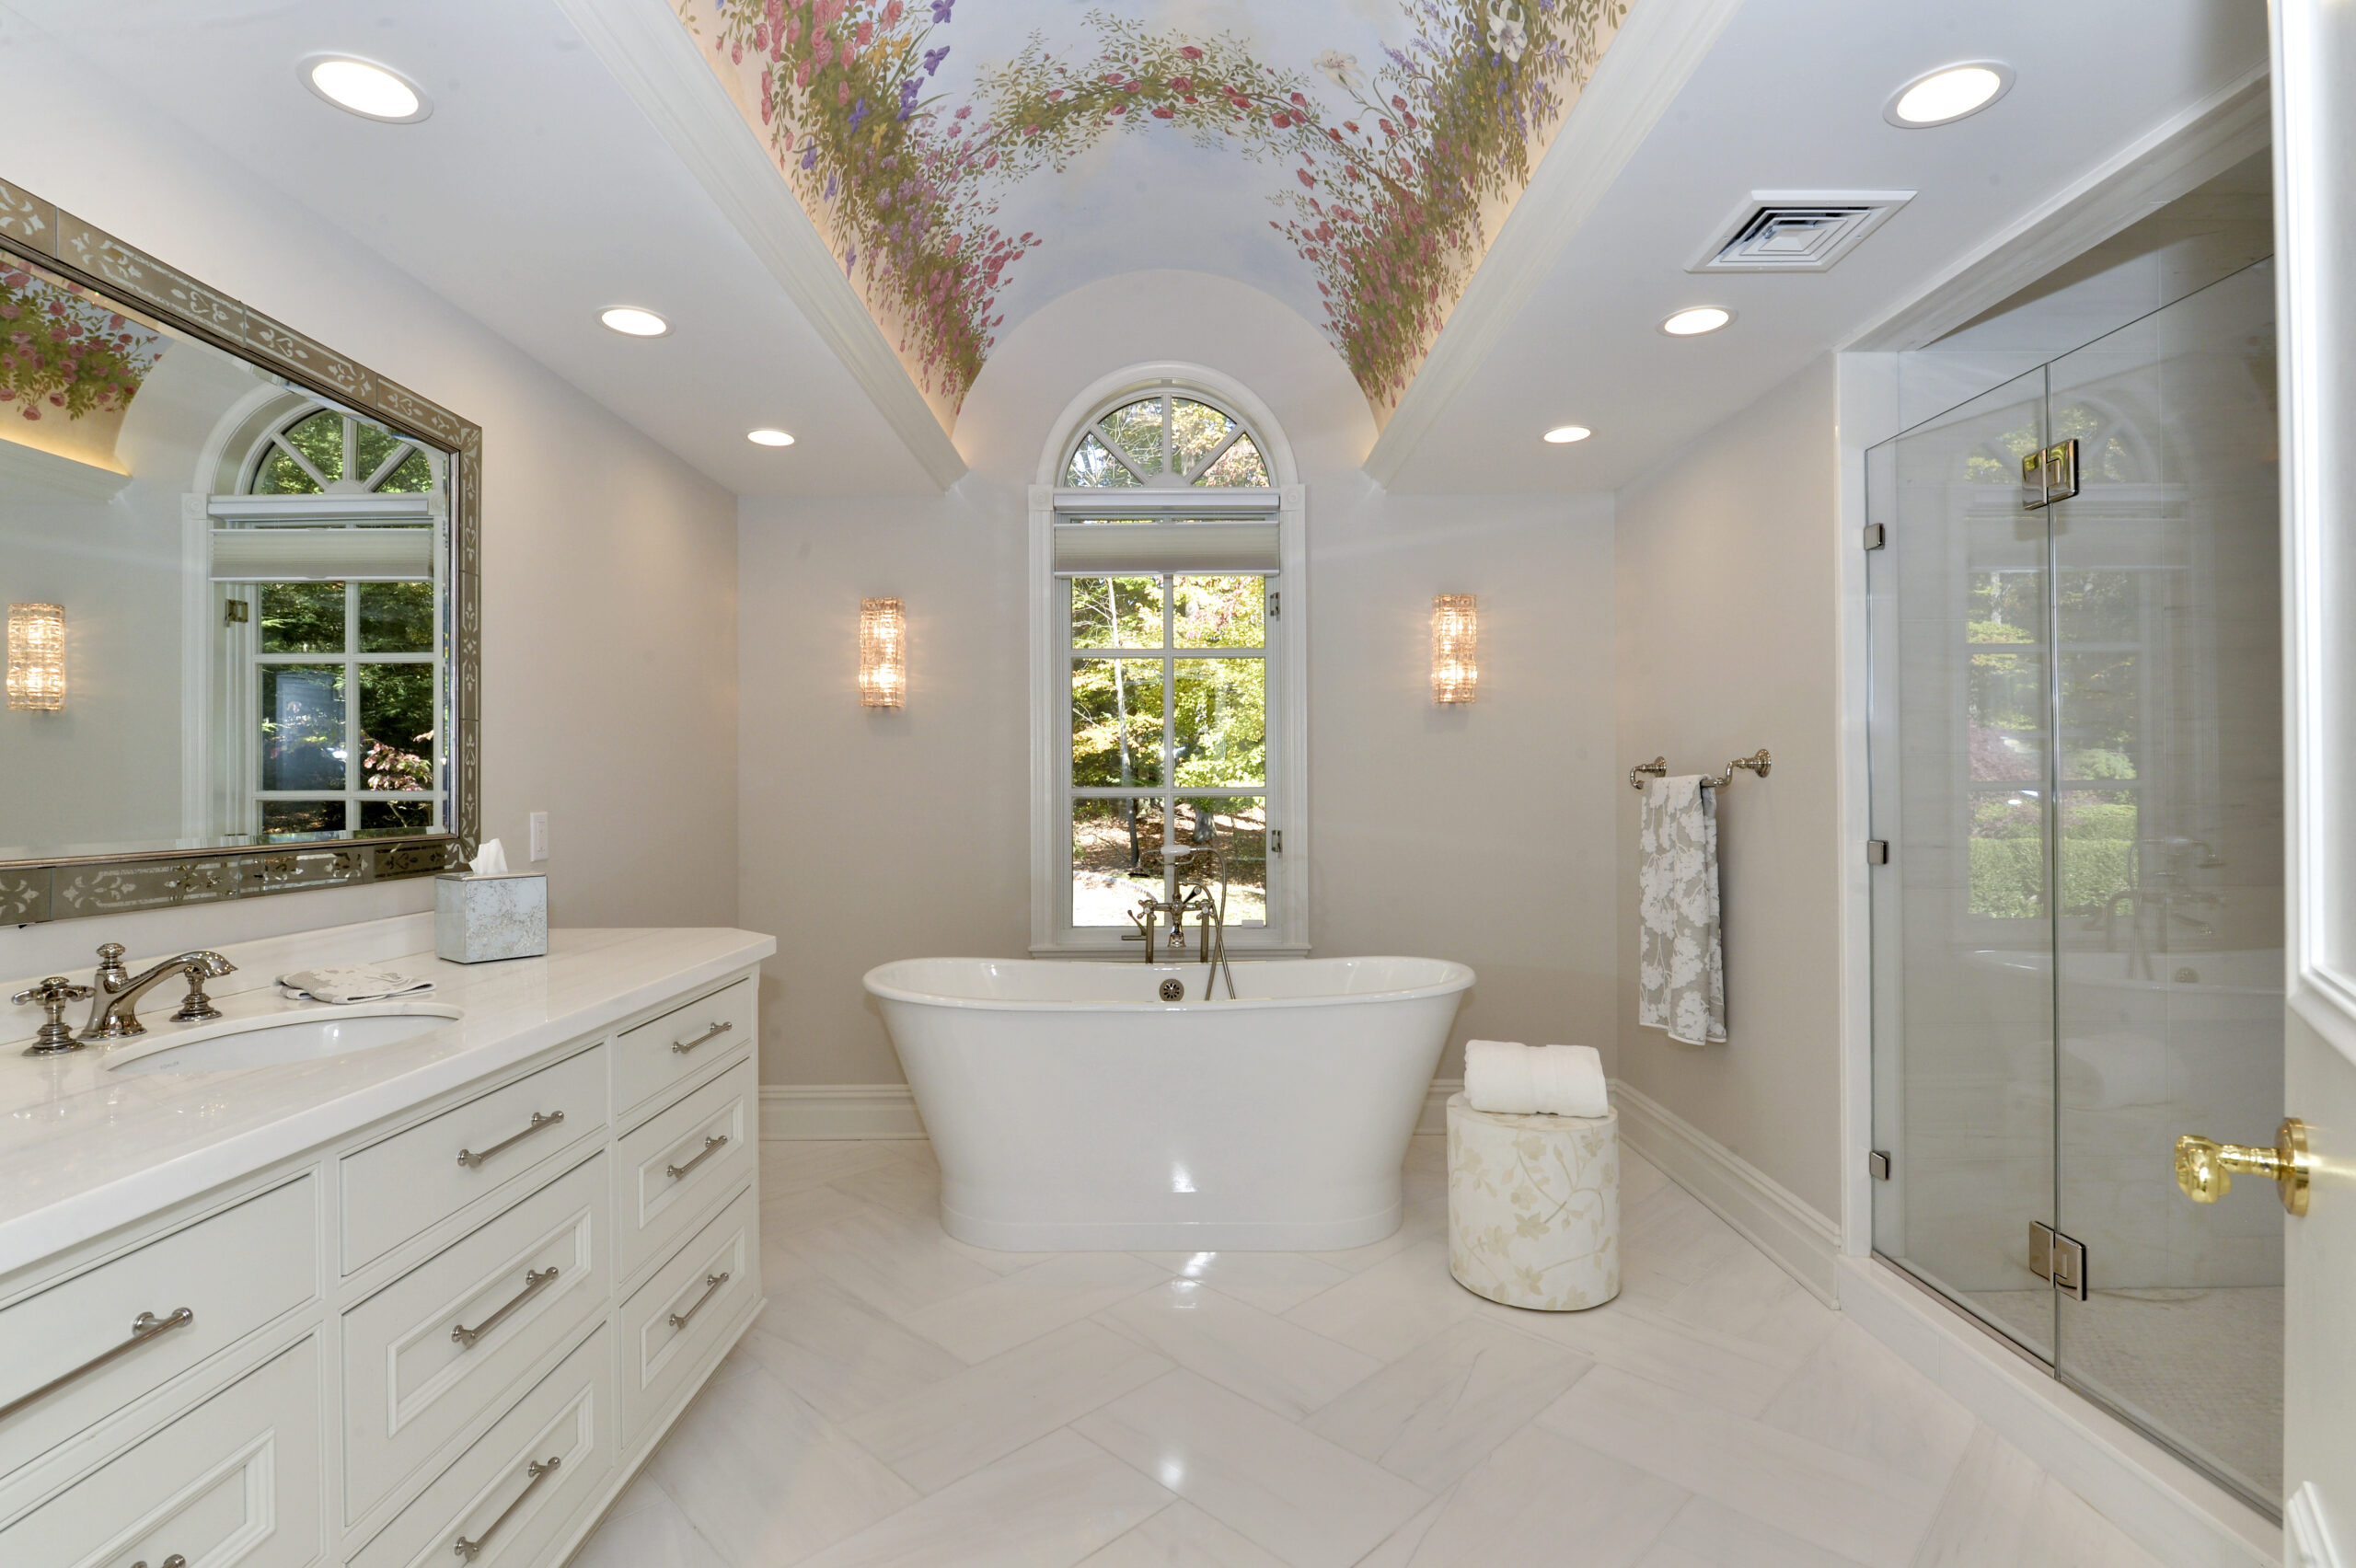 Interior view of a bathtub 